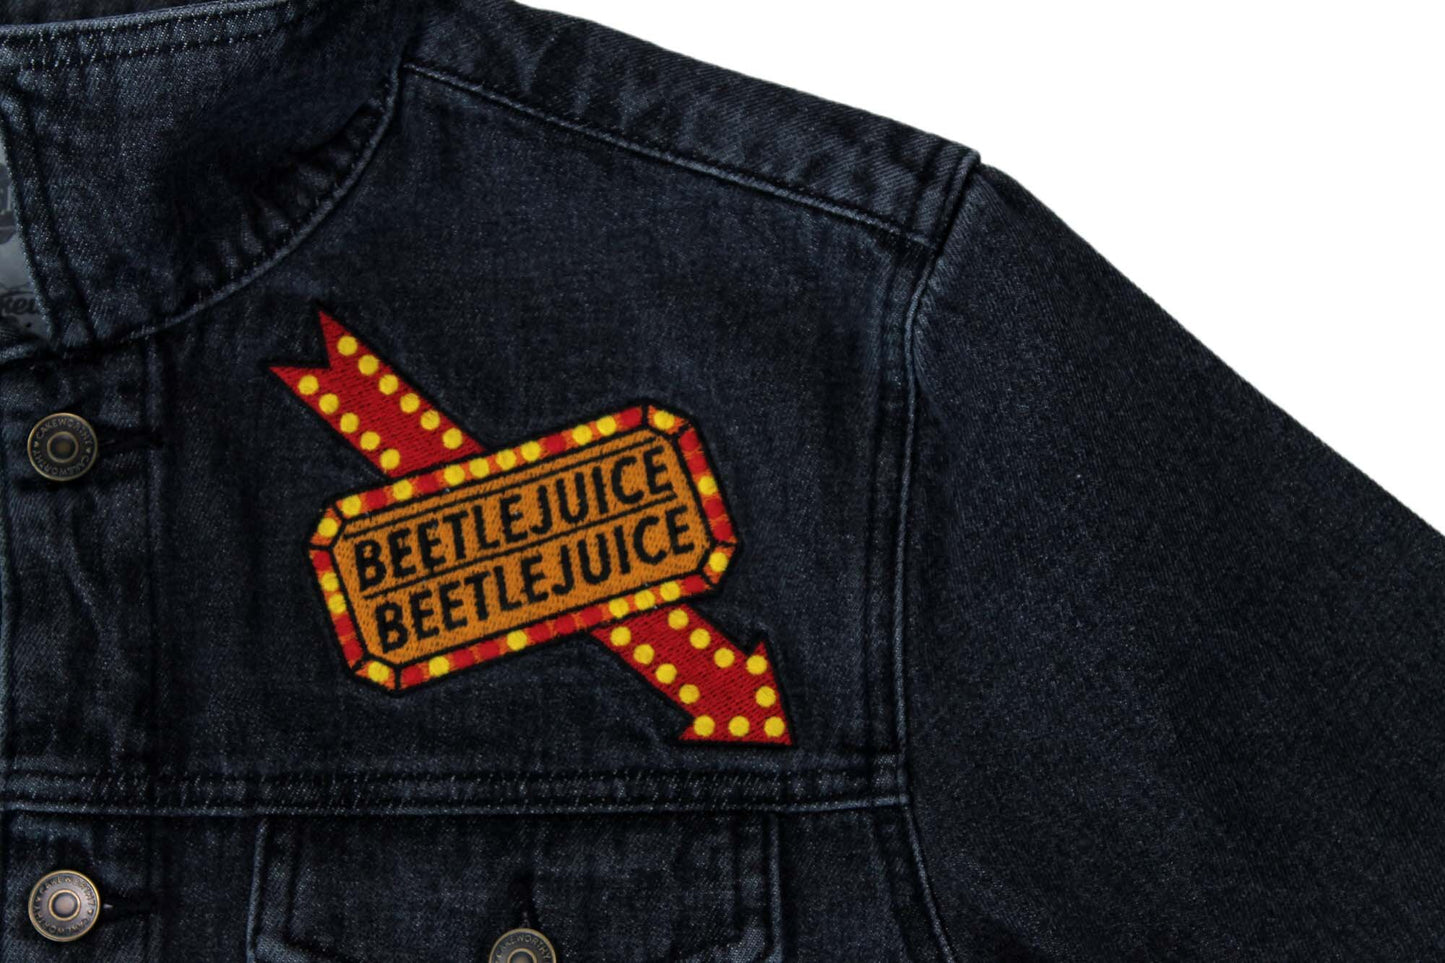 Cakeworthy - Beetlejuice Denim Jacket